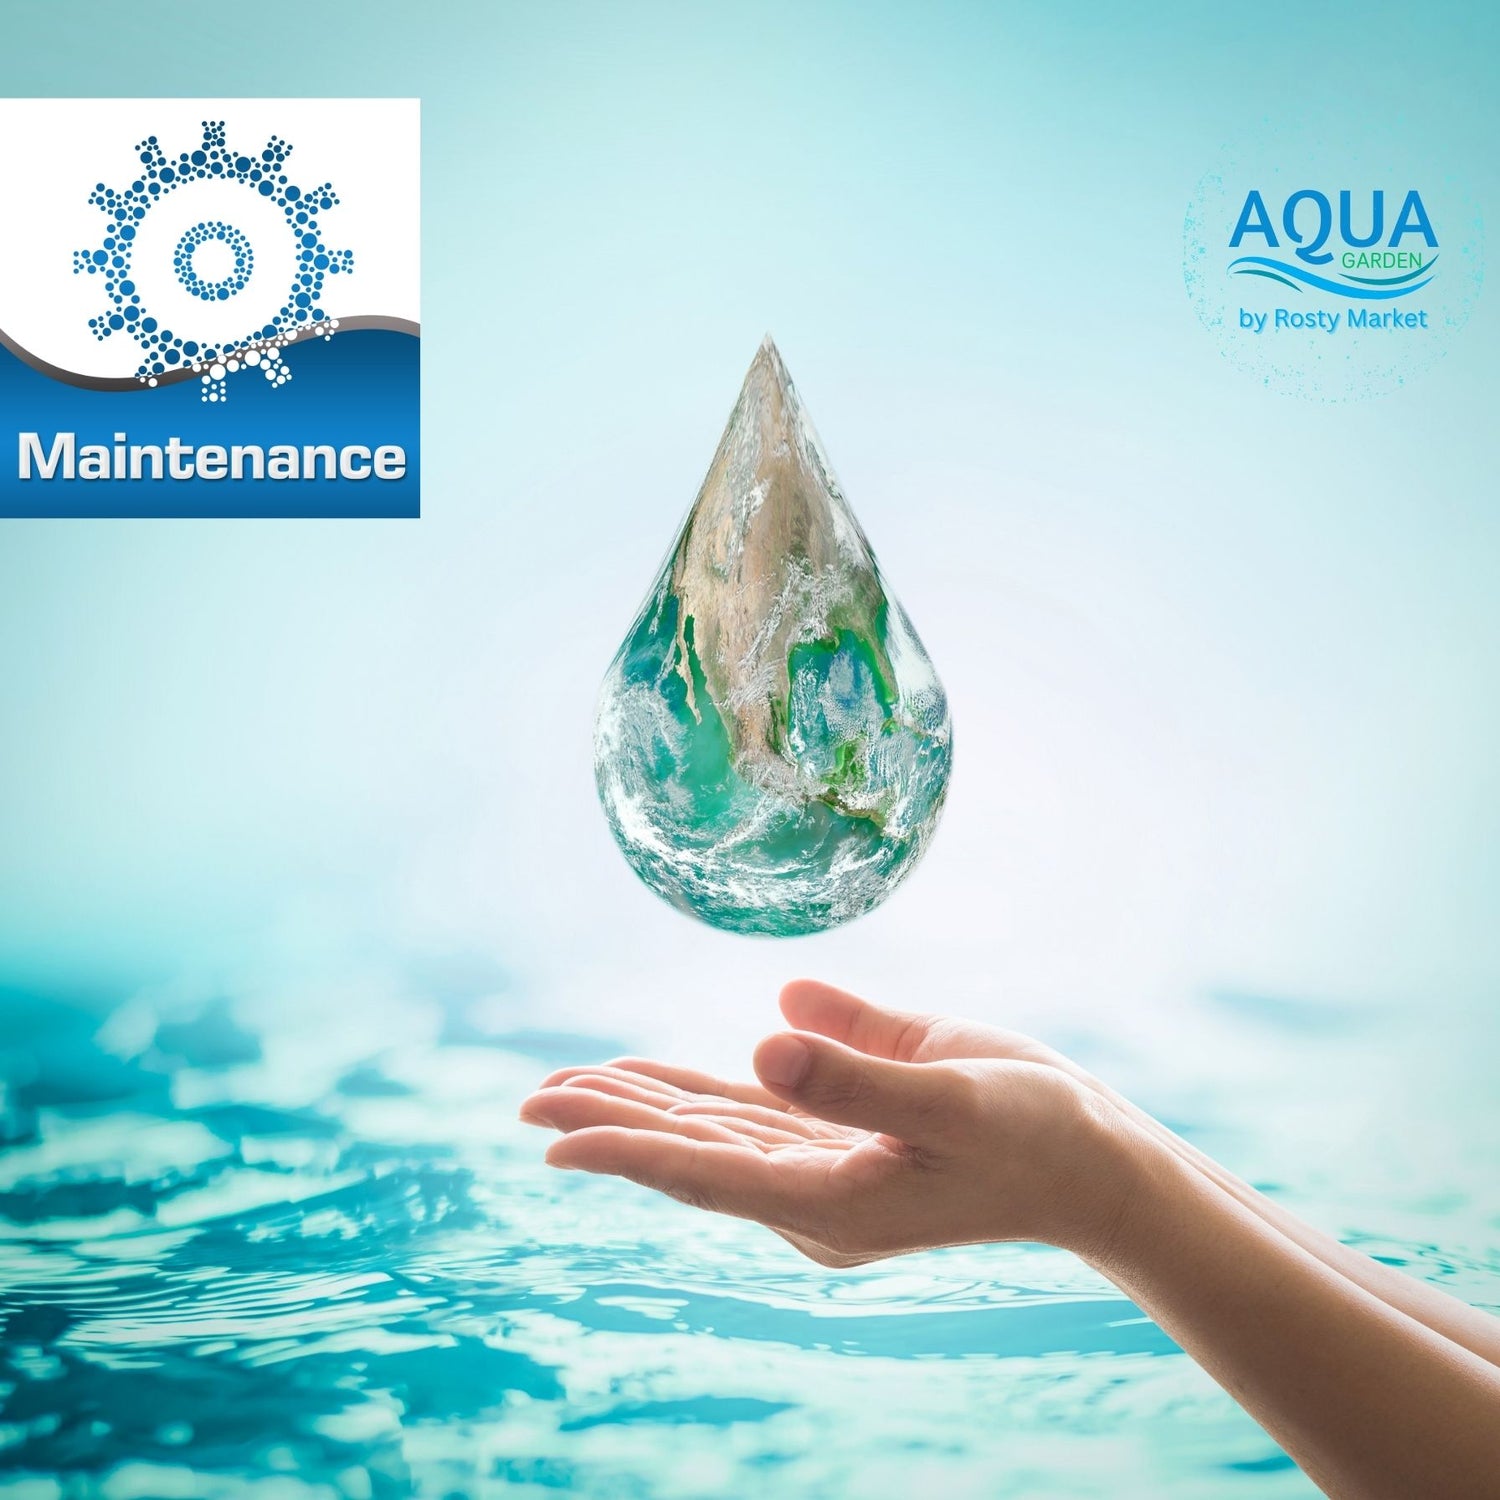 Water Feature Maintenance, Opening and Closing (Winterizing)